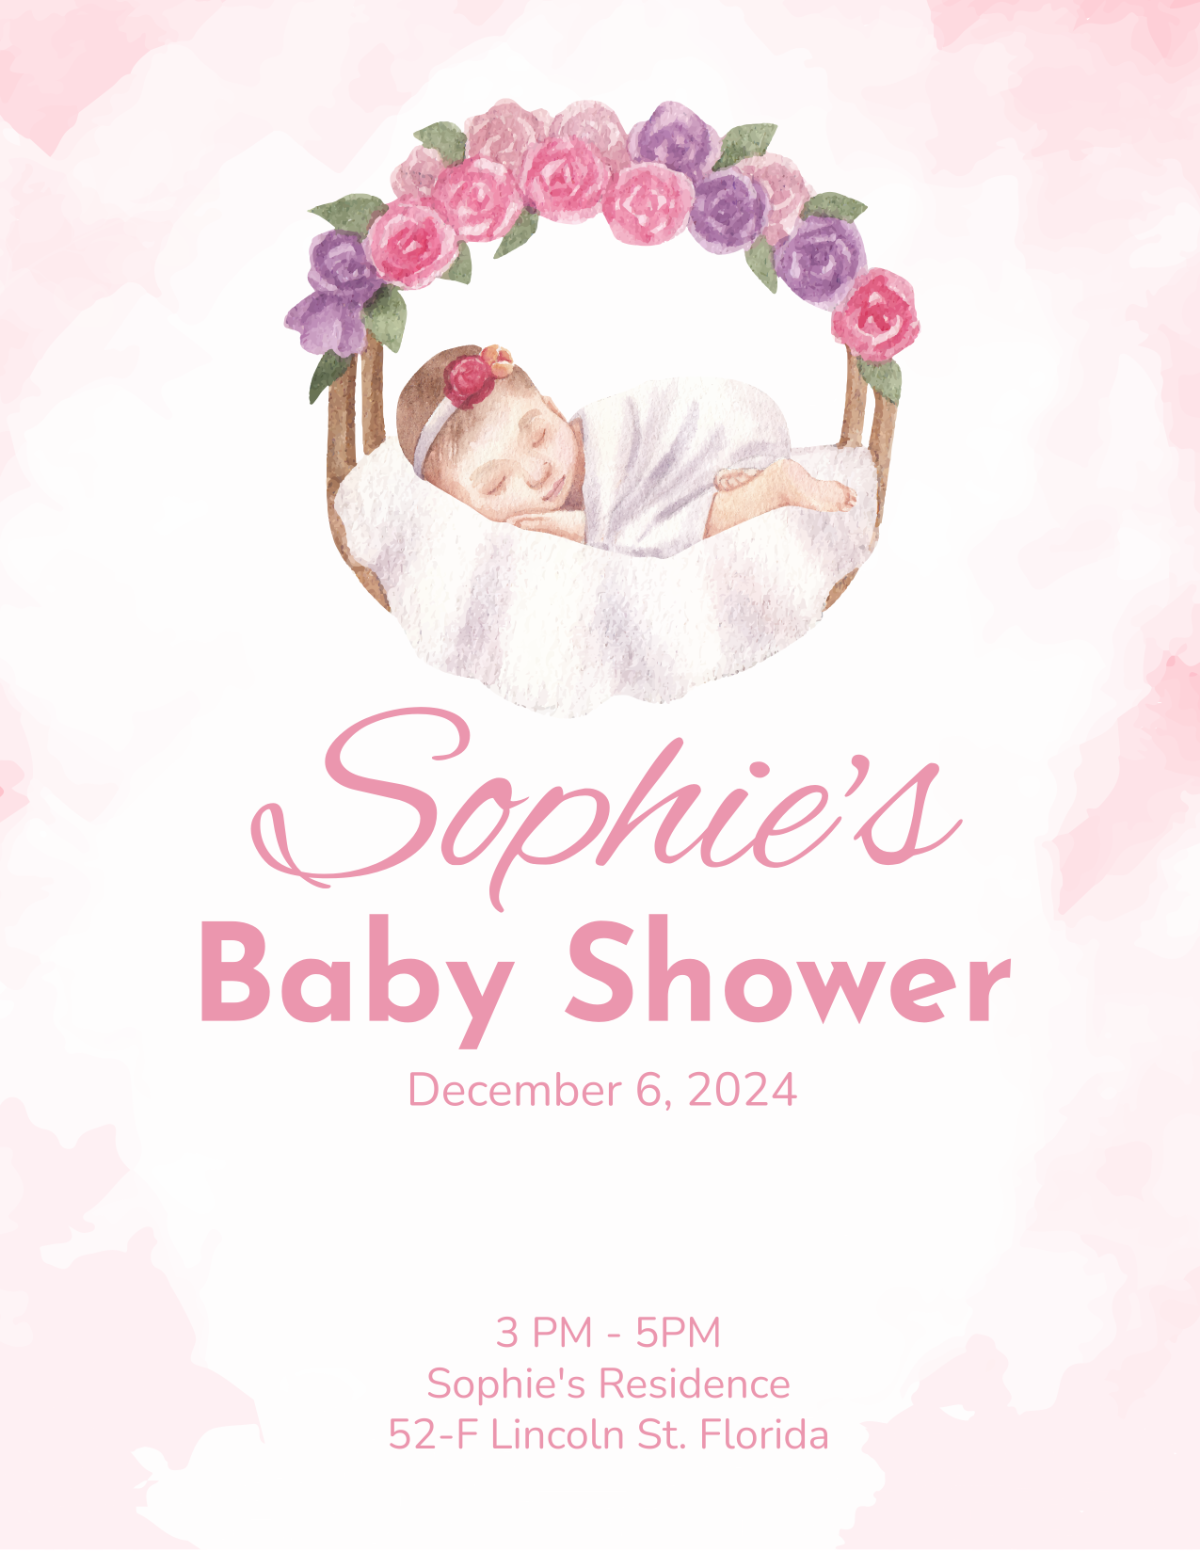 Baby shower programs